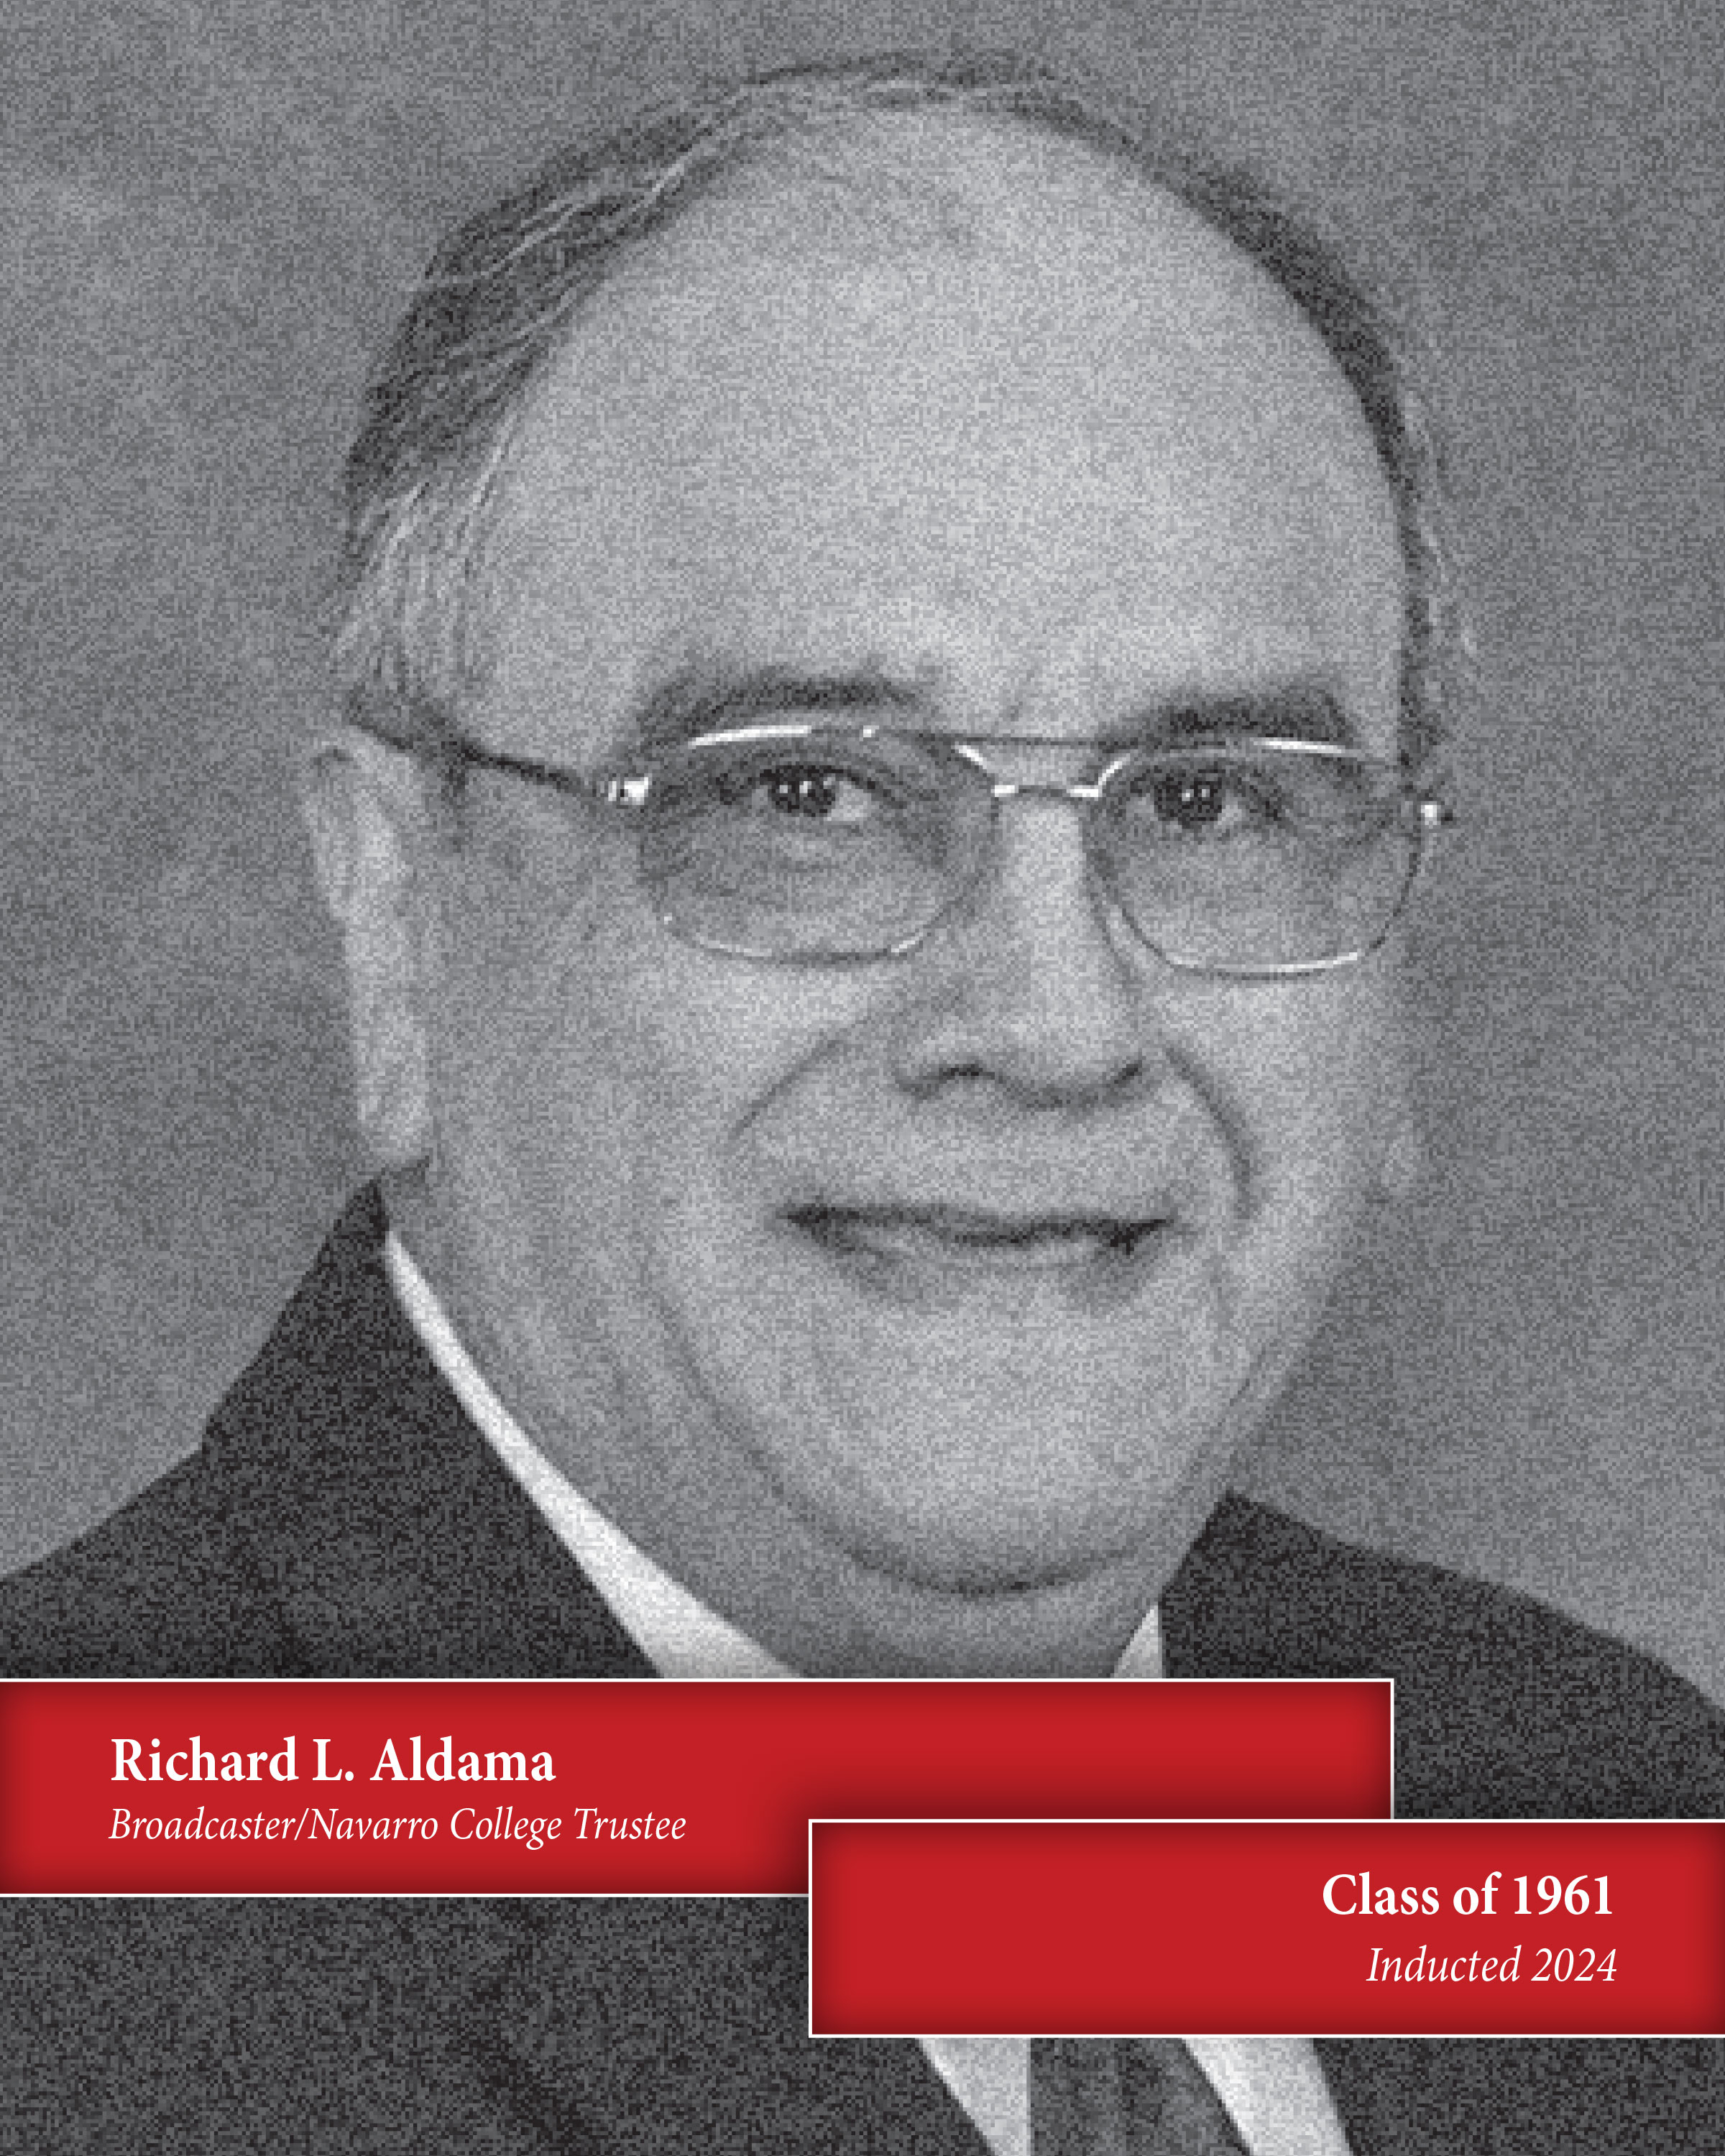 Richard Aldama, '61